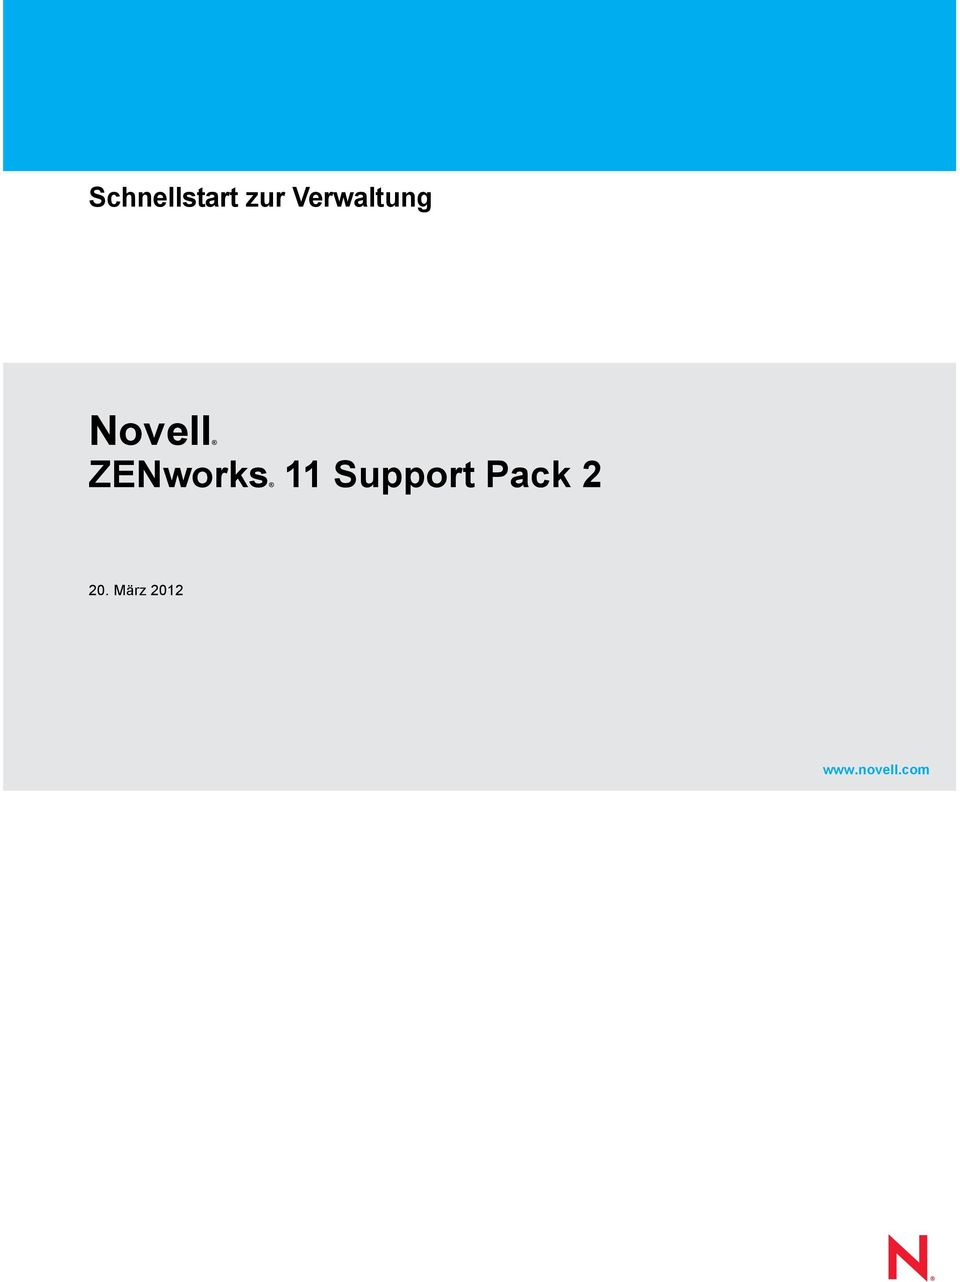 ZENworks 11 Support